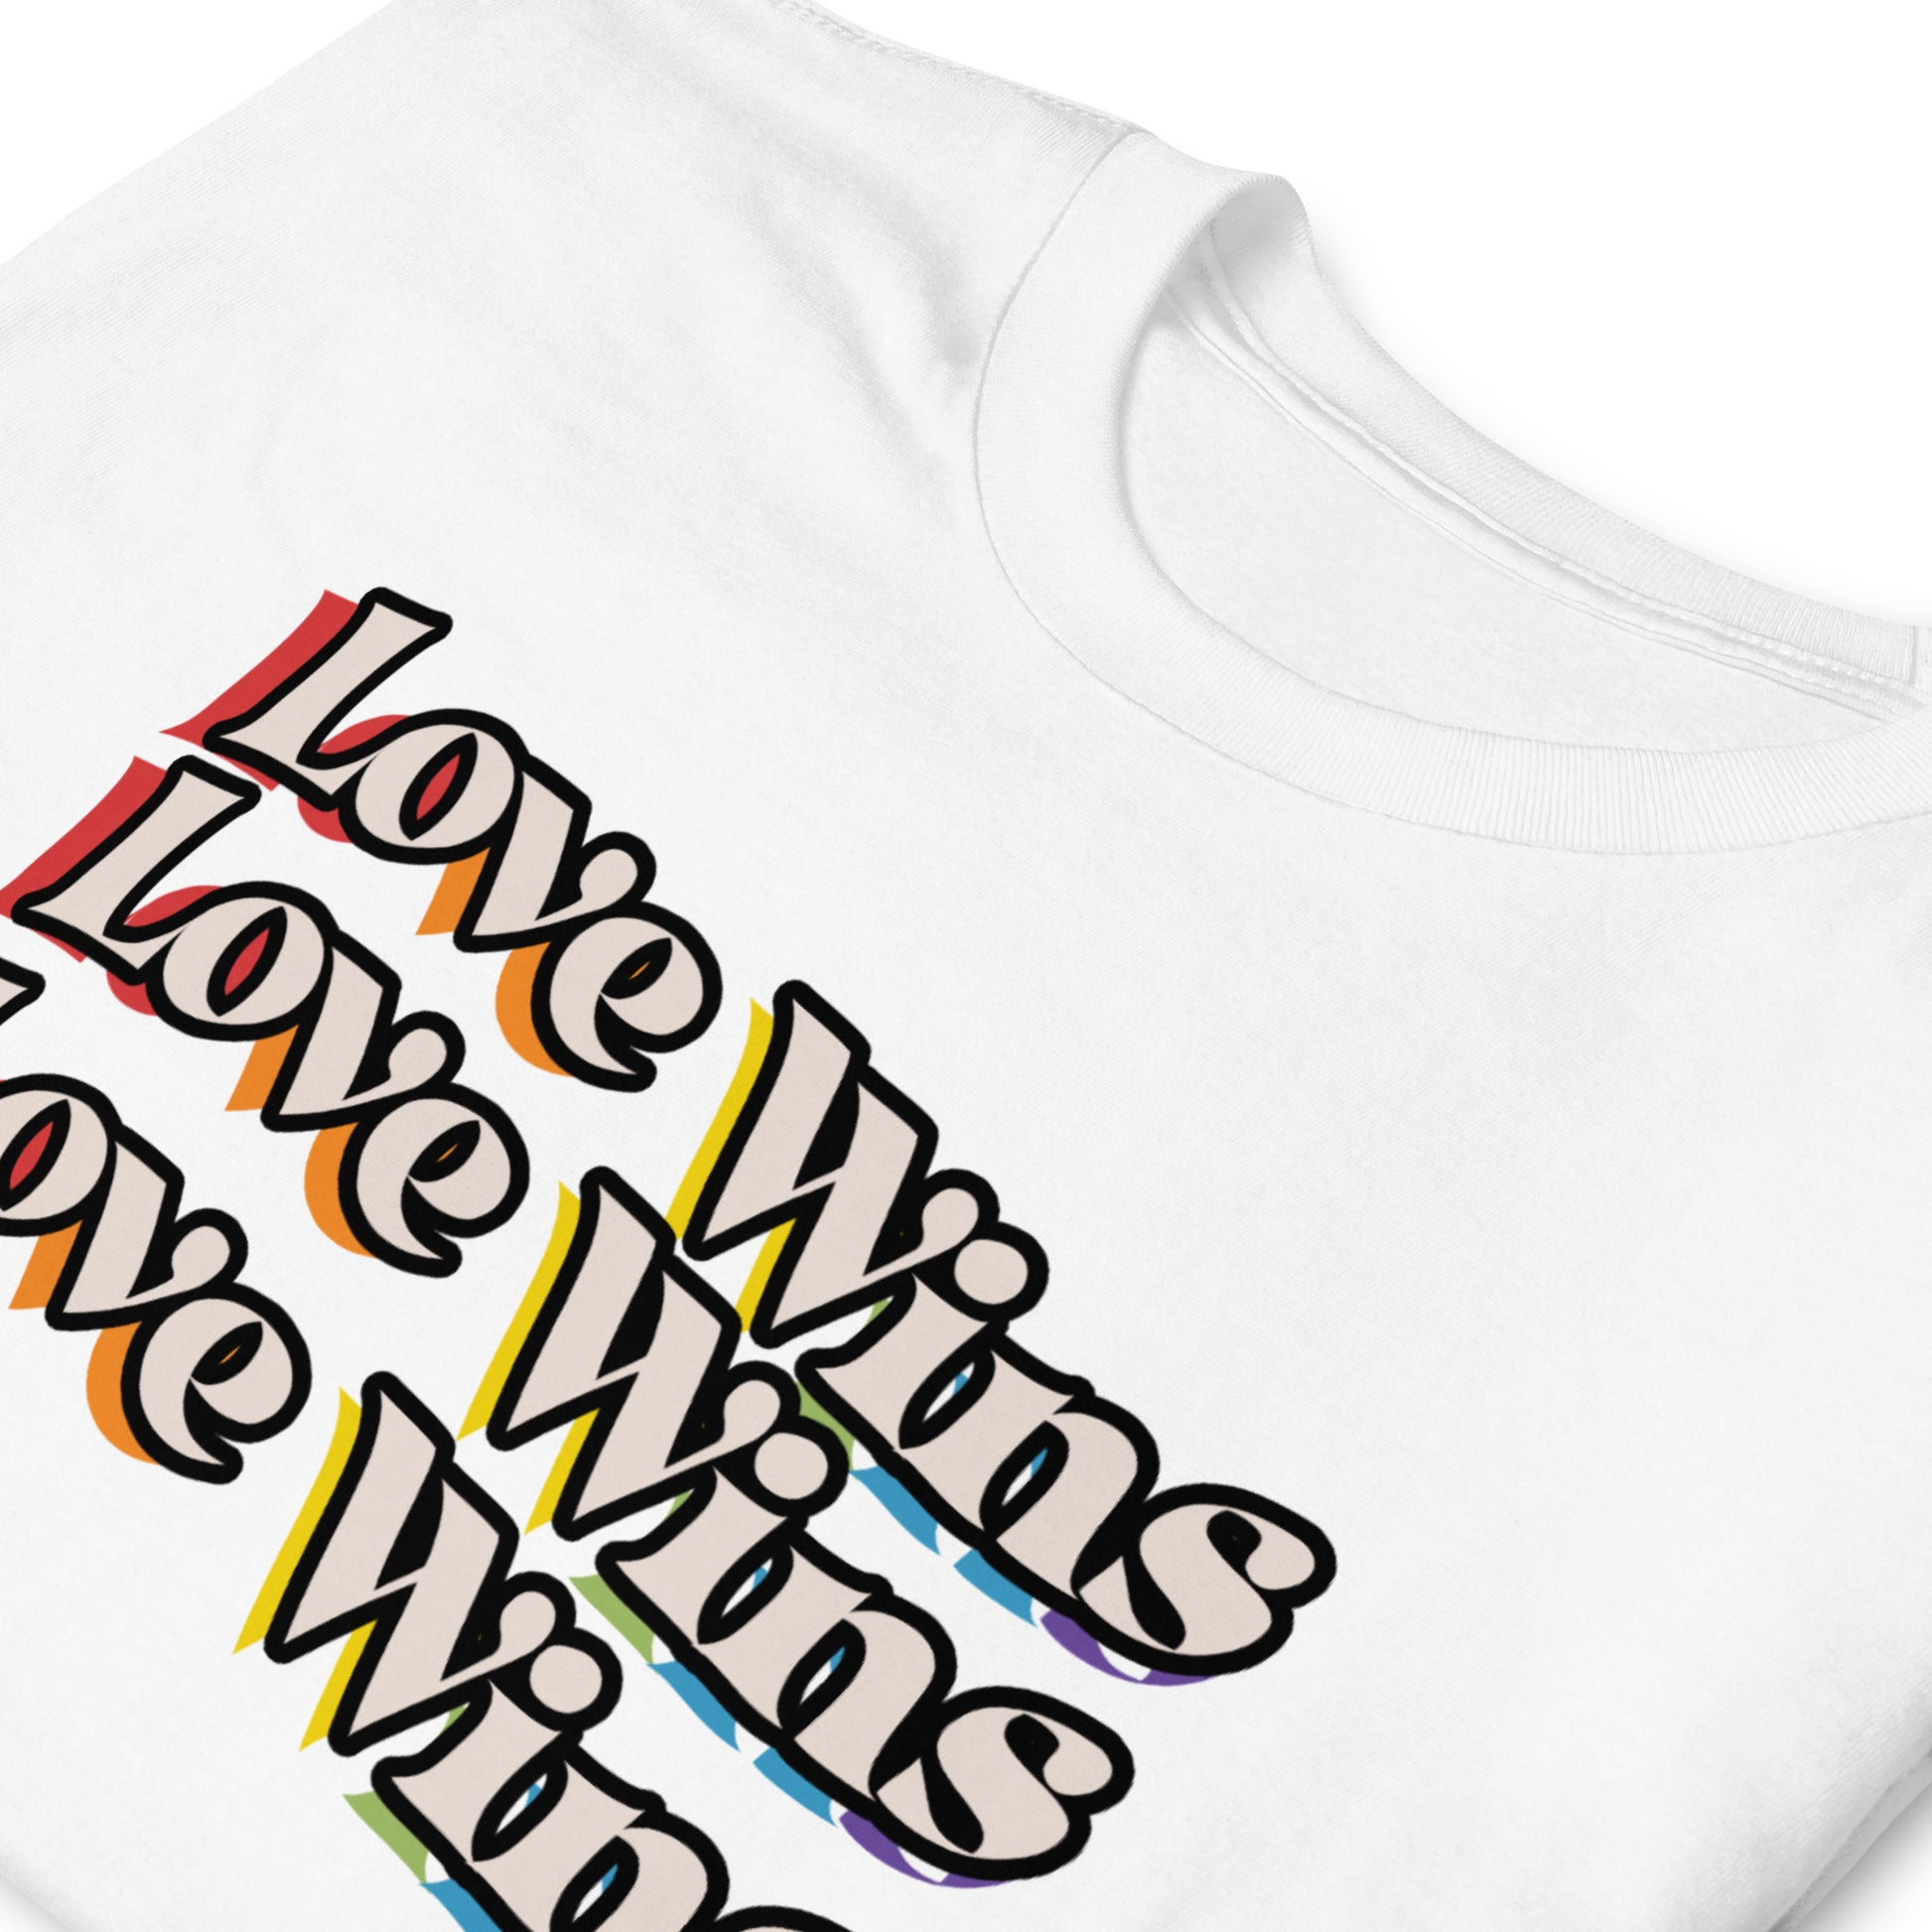 Love Wins Rainbow Shadow Unisex T-Shirt - Rose Gold Co. Shop